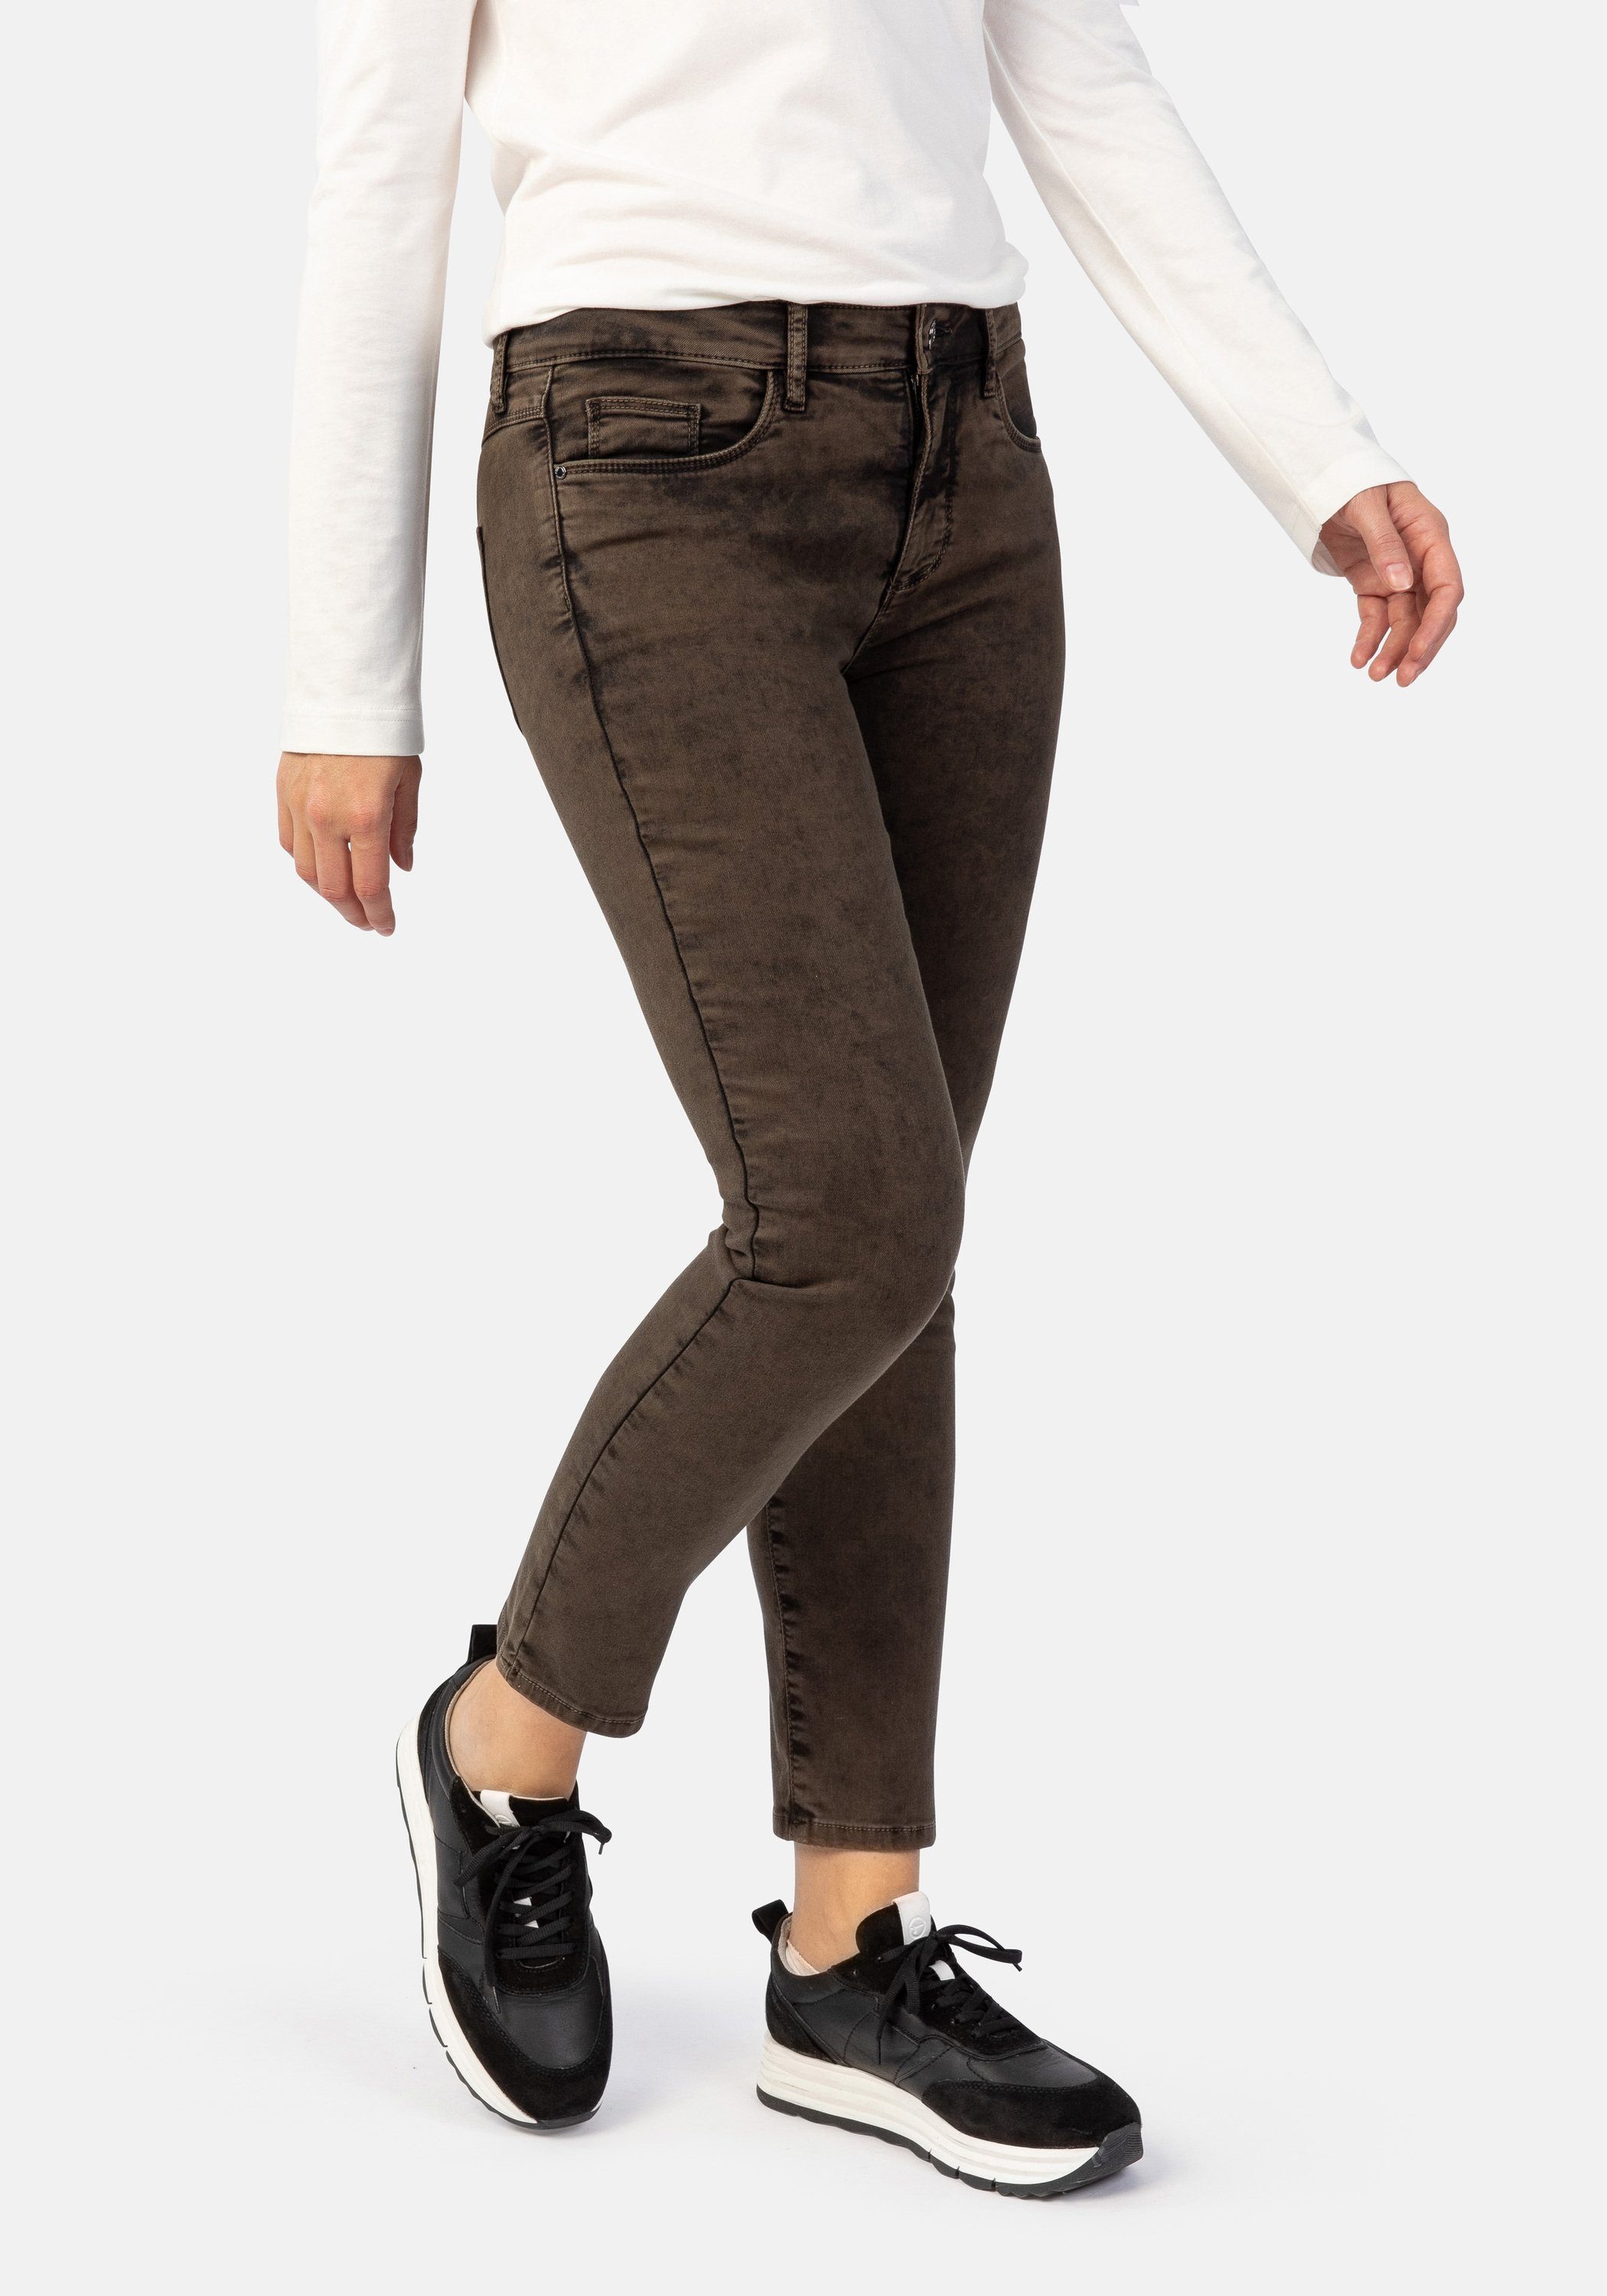 STOOKER WOMEN 5-Pocket-Jeans Florenz Colour autumn Slim Fit chocolate brown wash